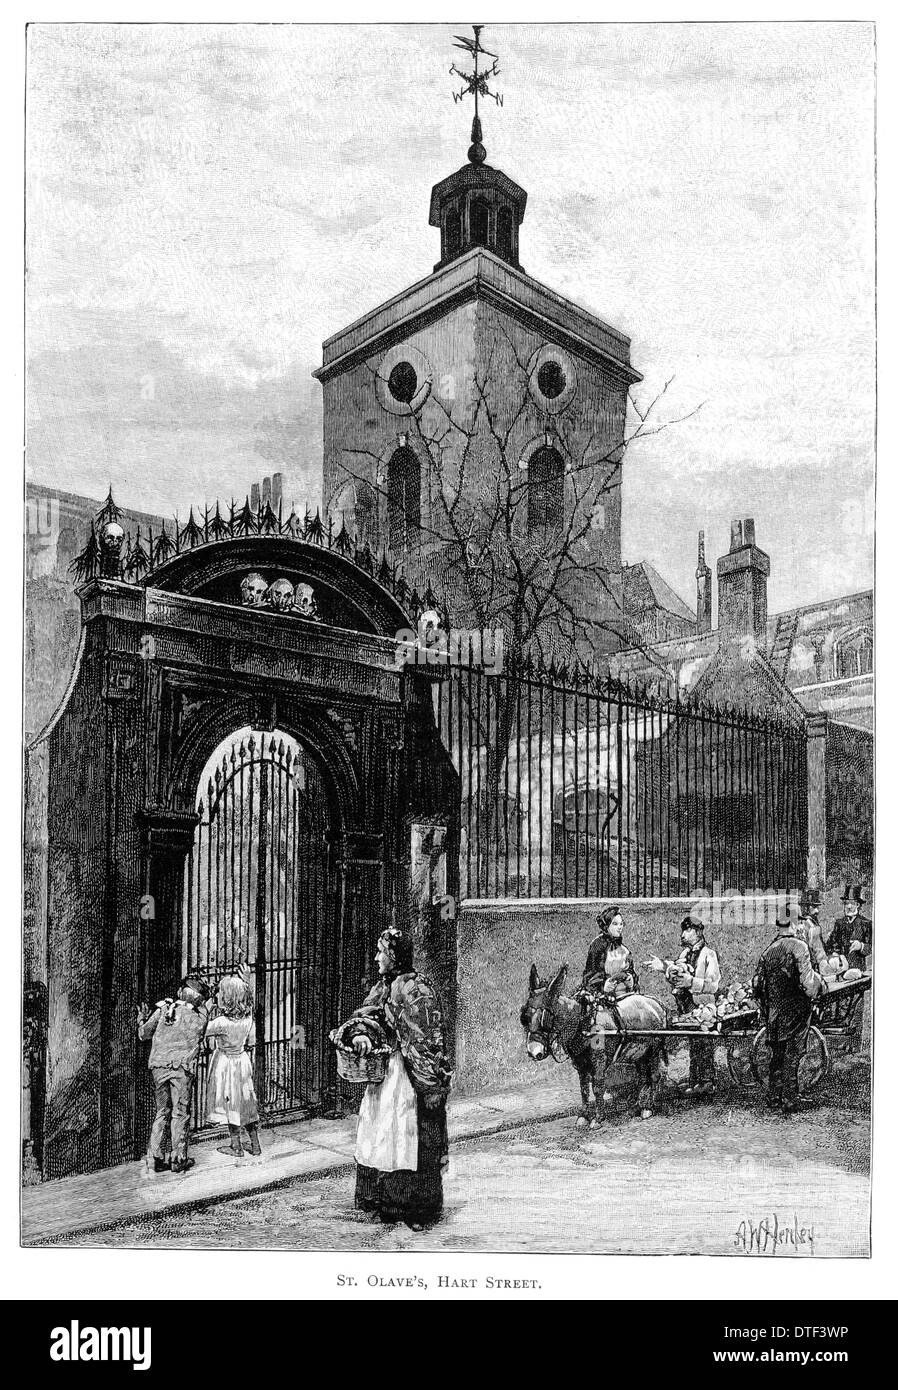 Saint Olave's Hart Street Circa 1890 Stock Photo